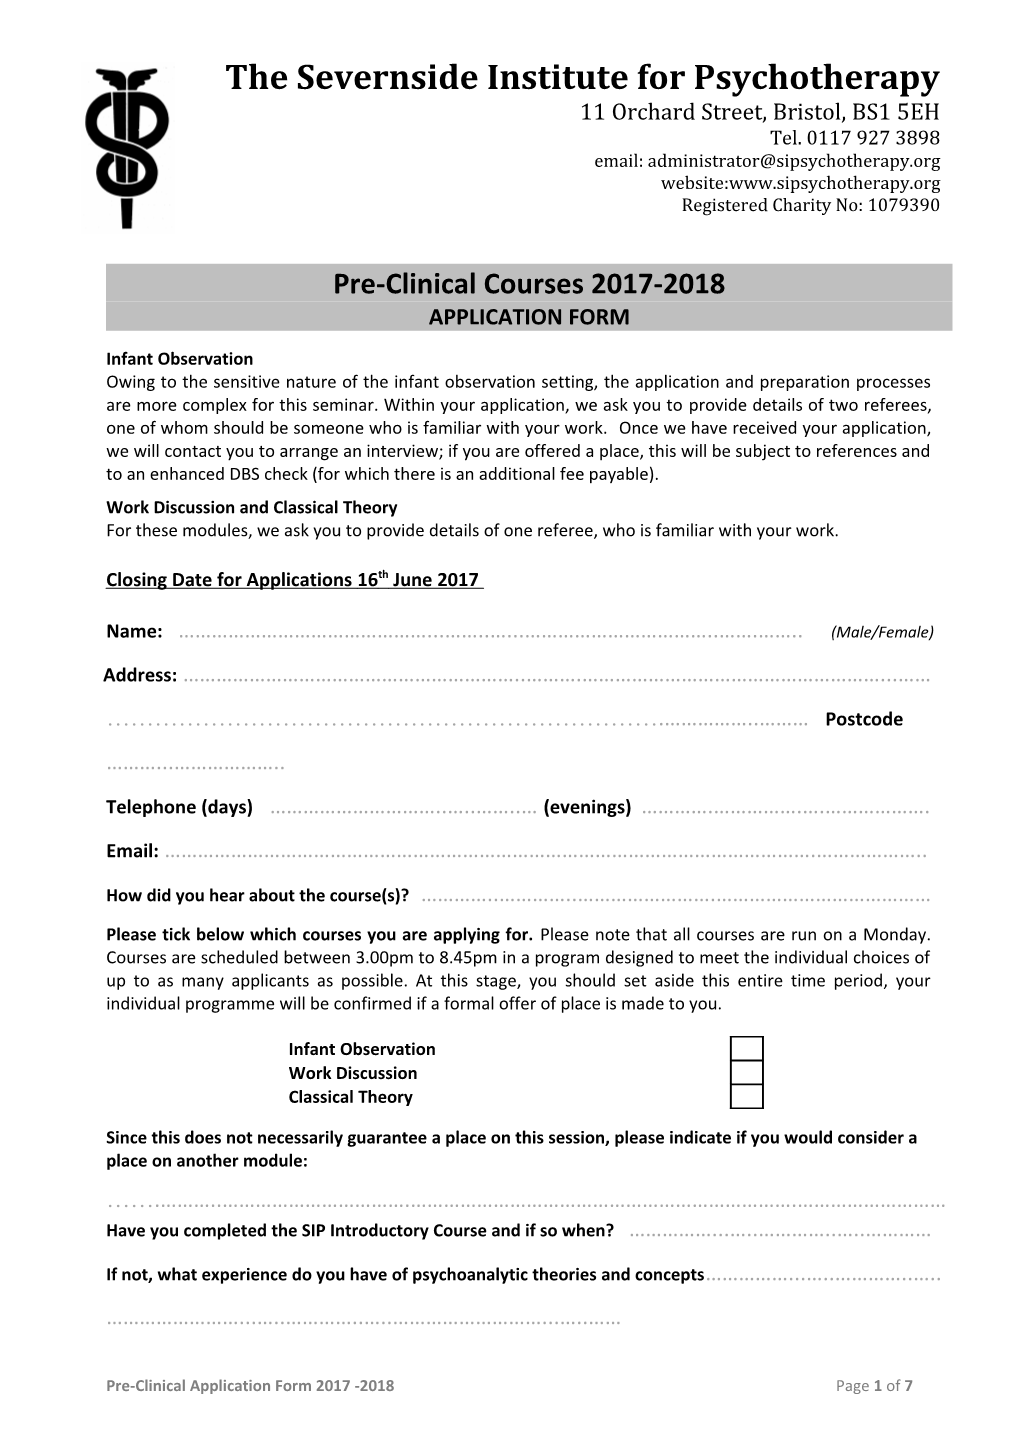 Pre-Clinical Courses 2017-2018